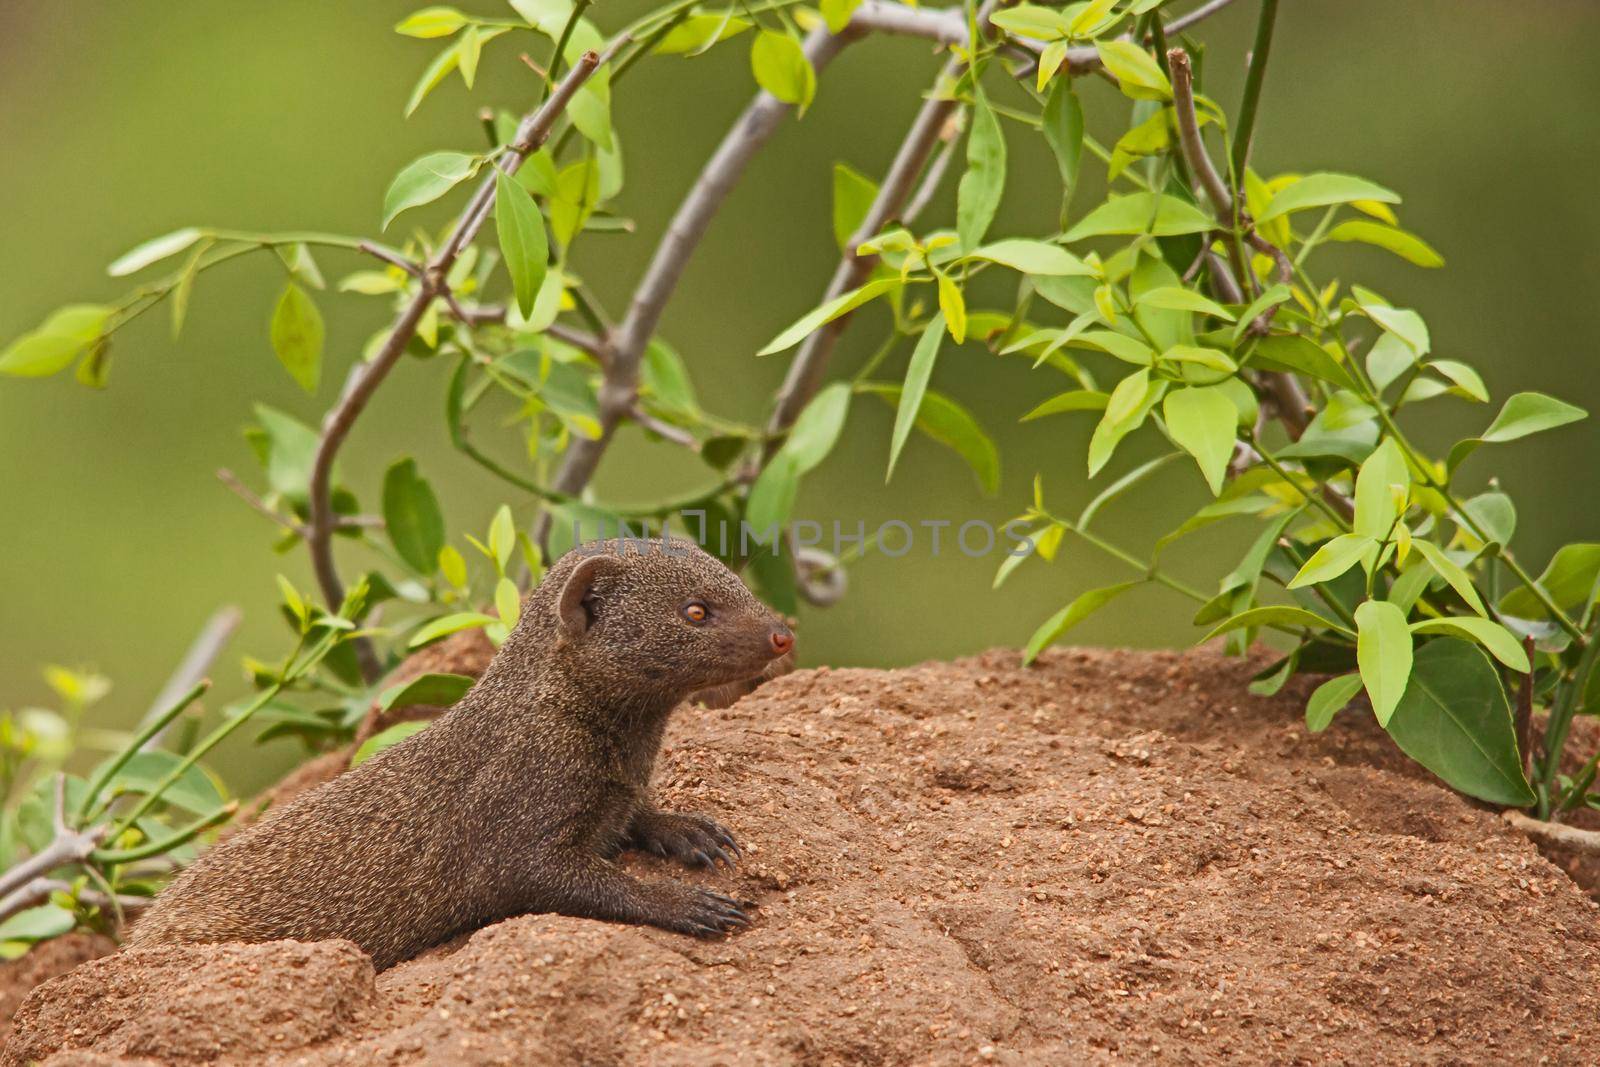 Dwarf Mongoose (Helogale parvula) 13811 by kobus_peche